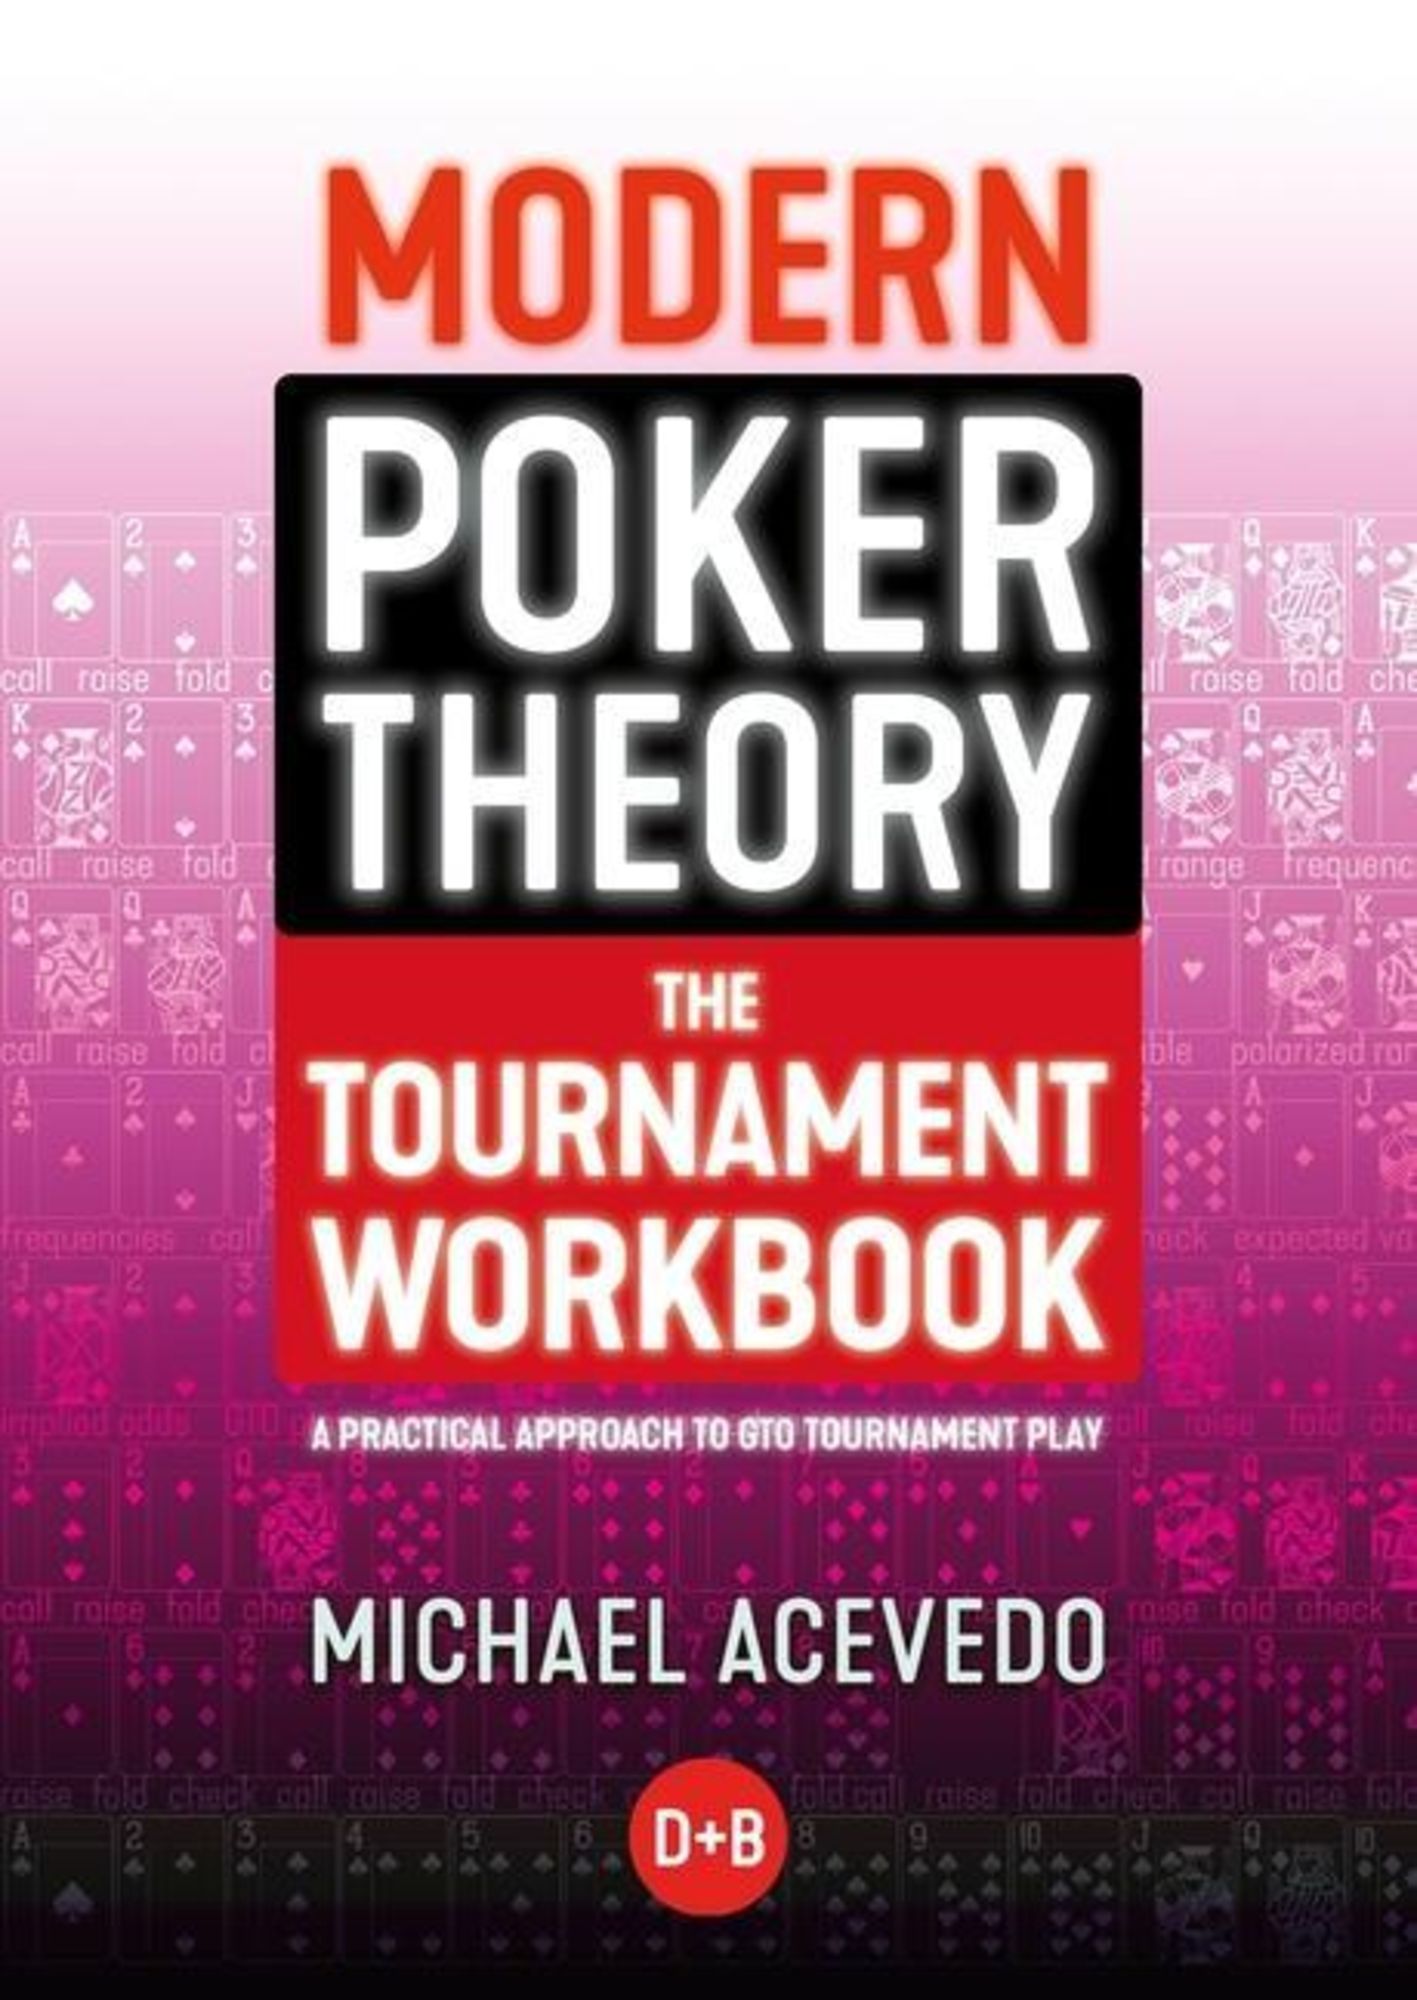 https://images.thalia.media/-/BF2000-2000/32a607254b5b480290b1647e2da446fa/modern-poker-theory-the-tournament-workbook-taschenbuch-michael-acevedo-englisch.jpeg